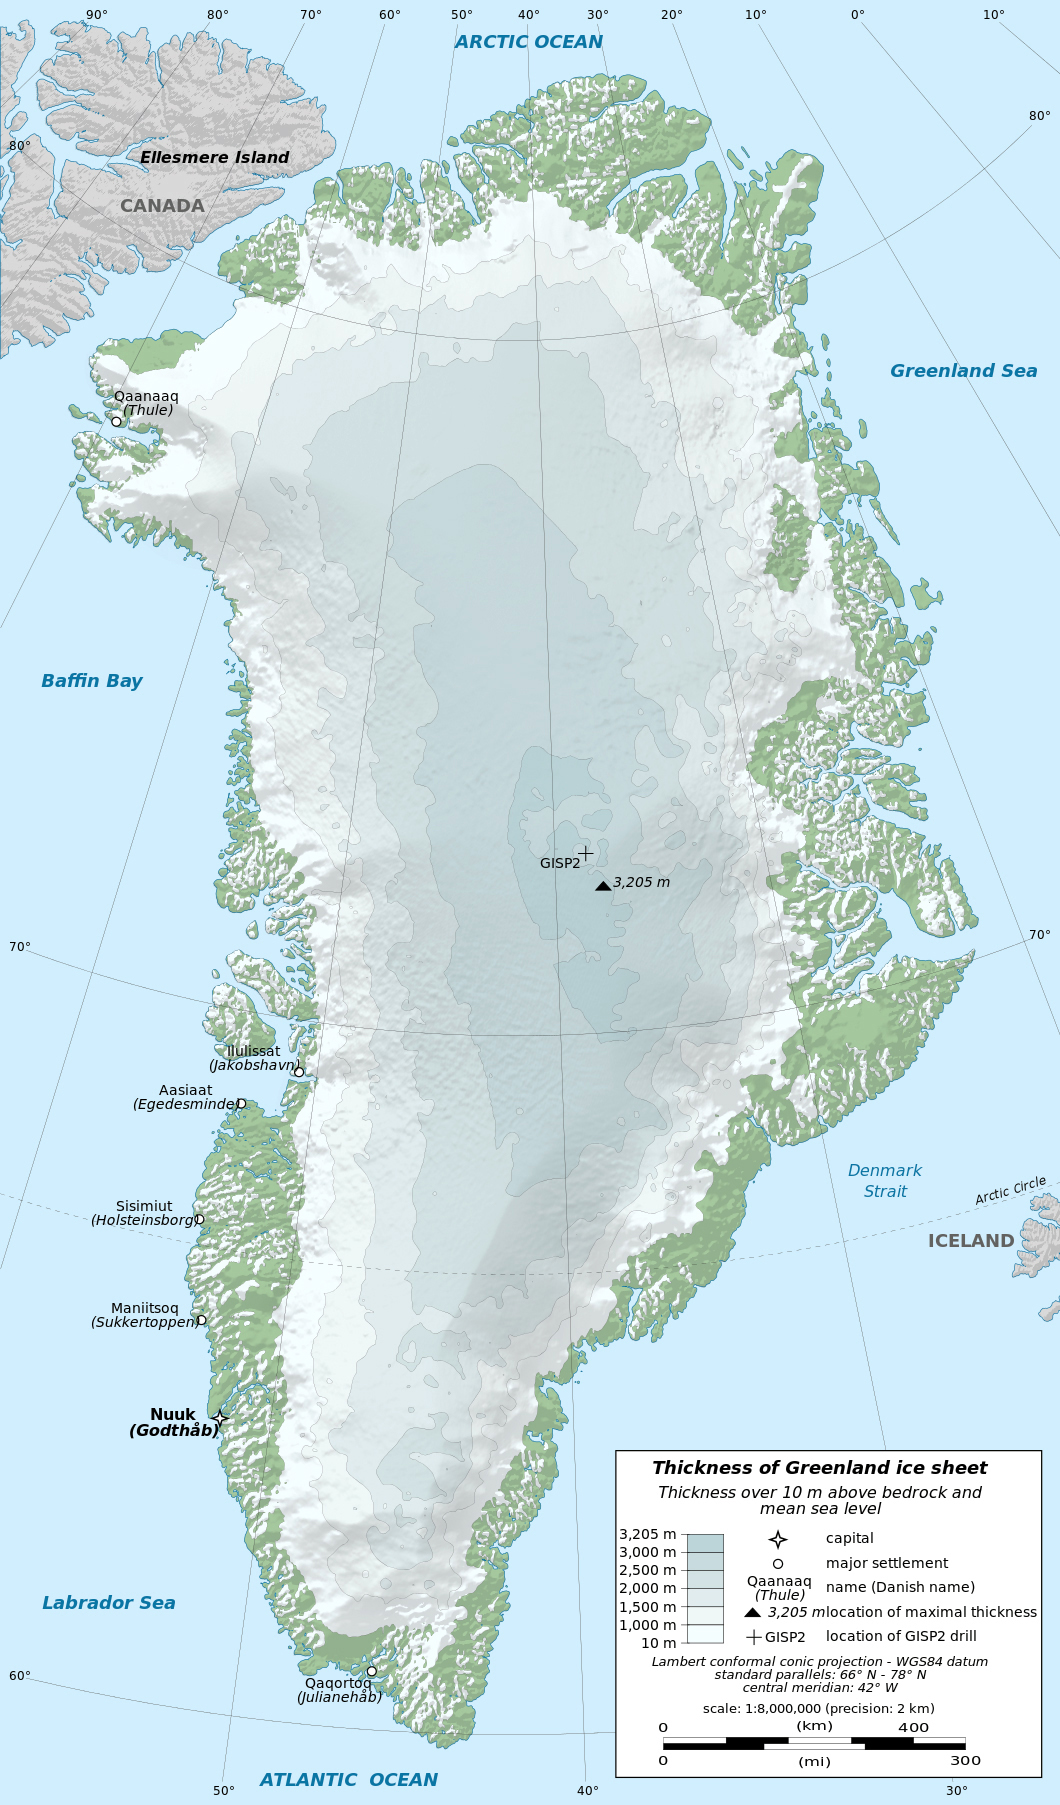 Greenland Cities